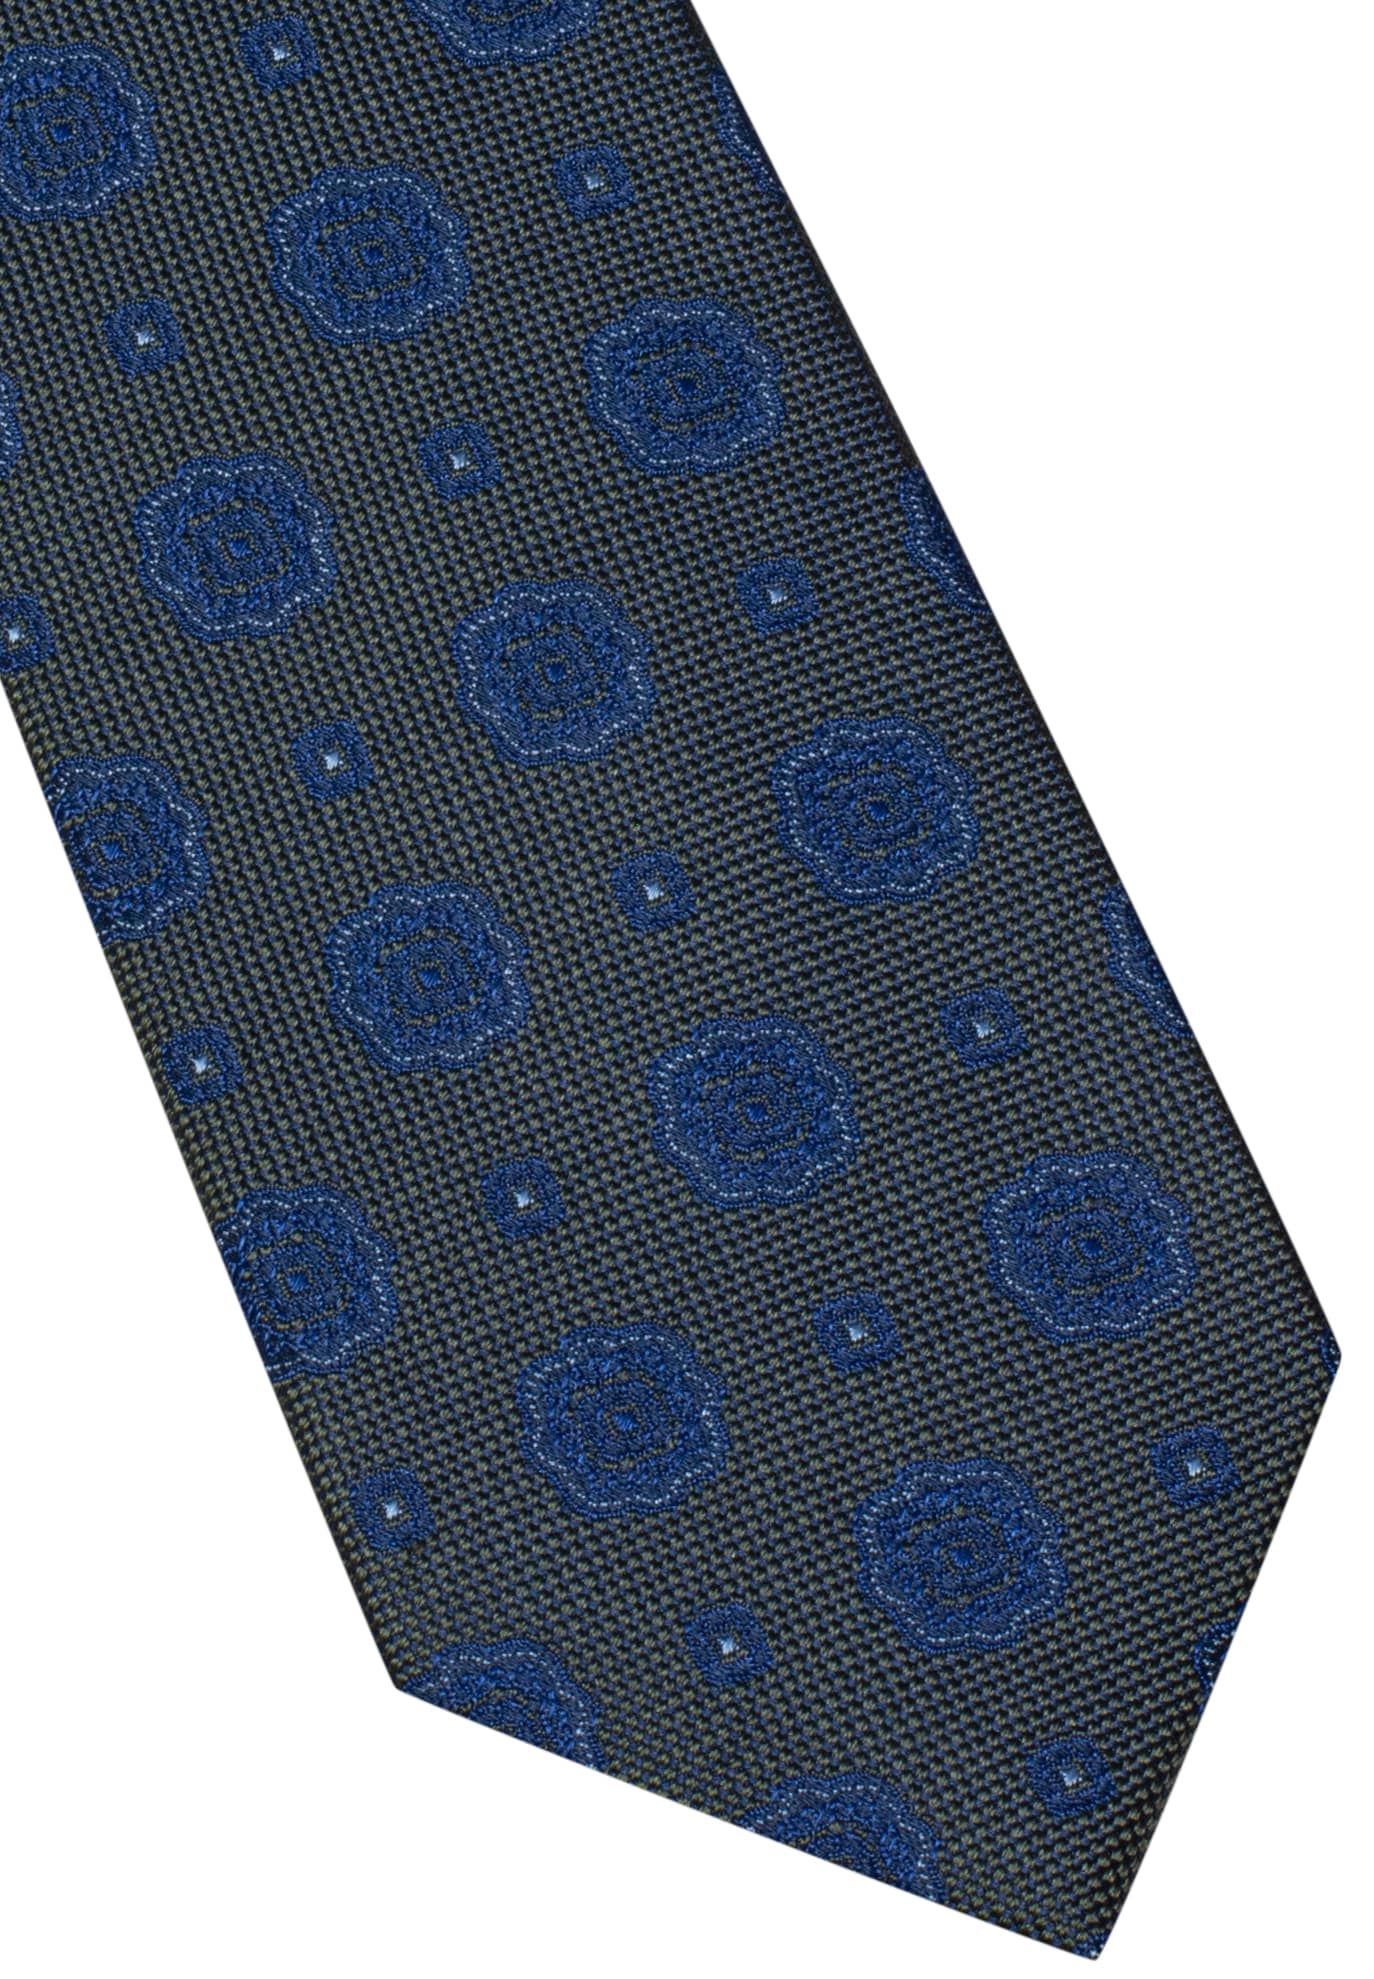 Krawatte in blau/grün gemustert | 1AC00183-81-48-142 142 blau/grün | 